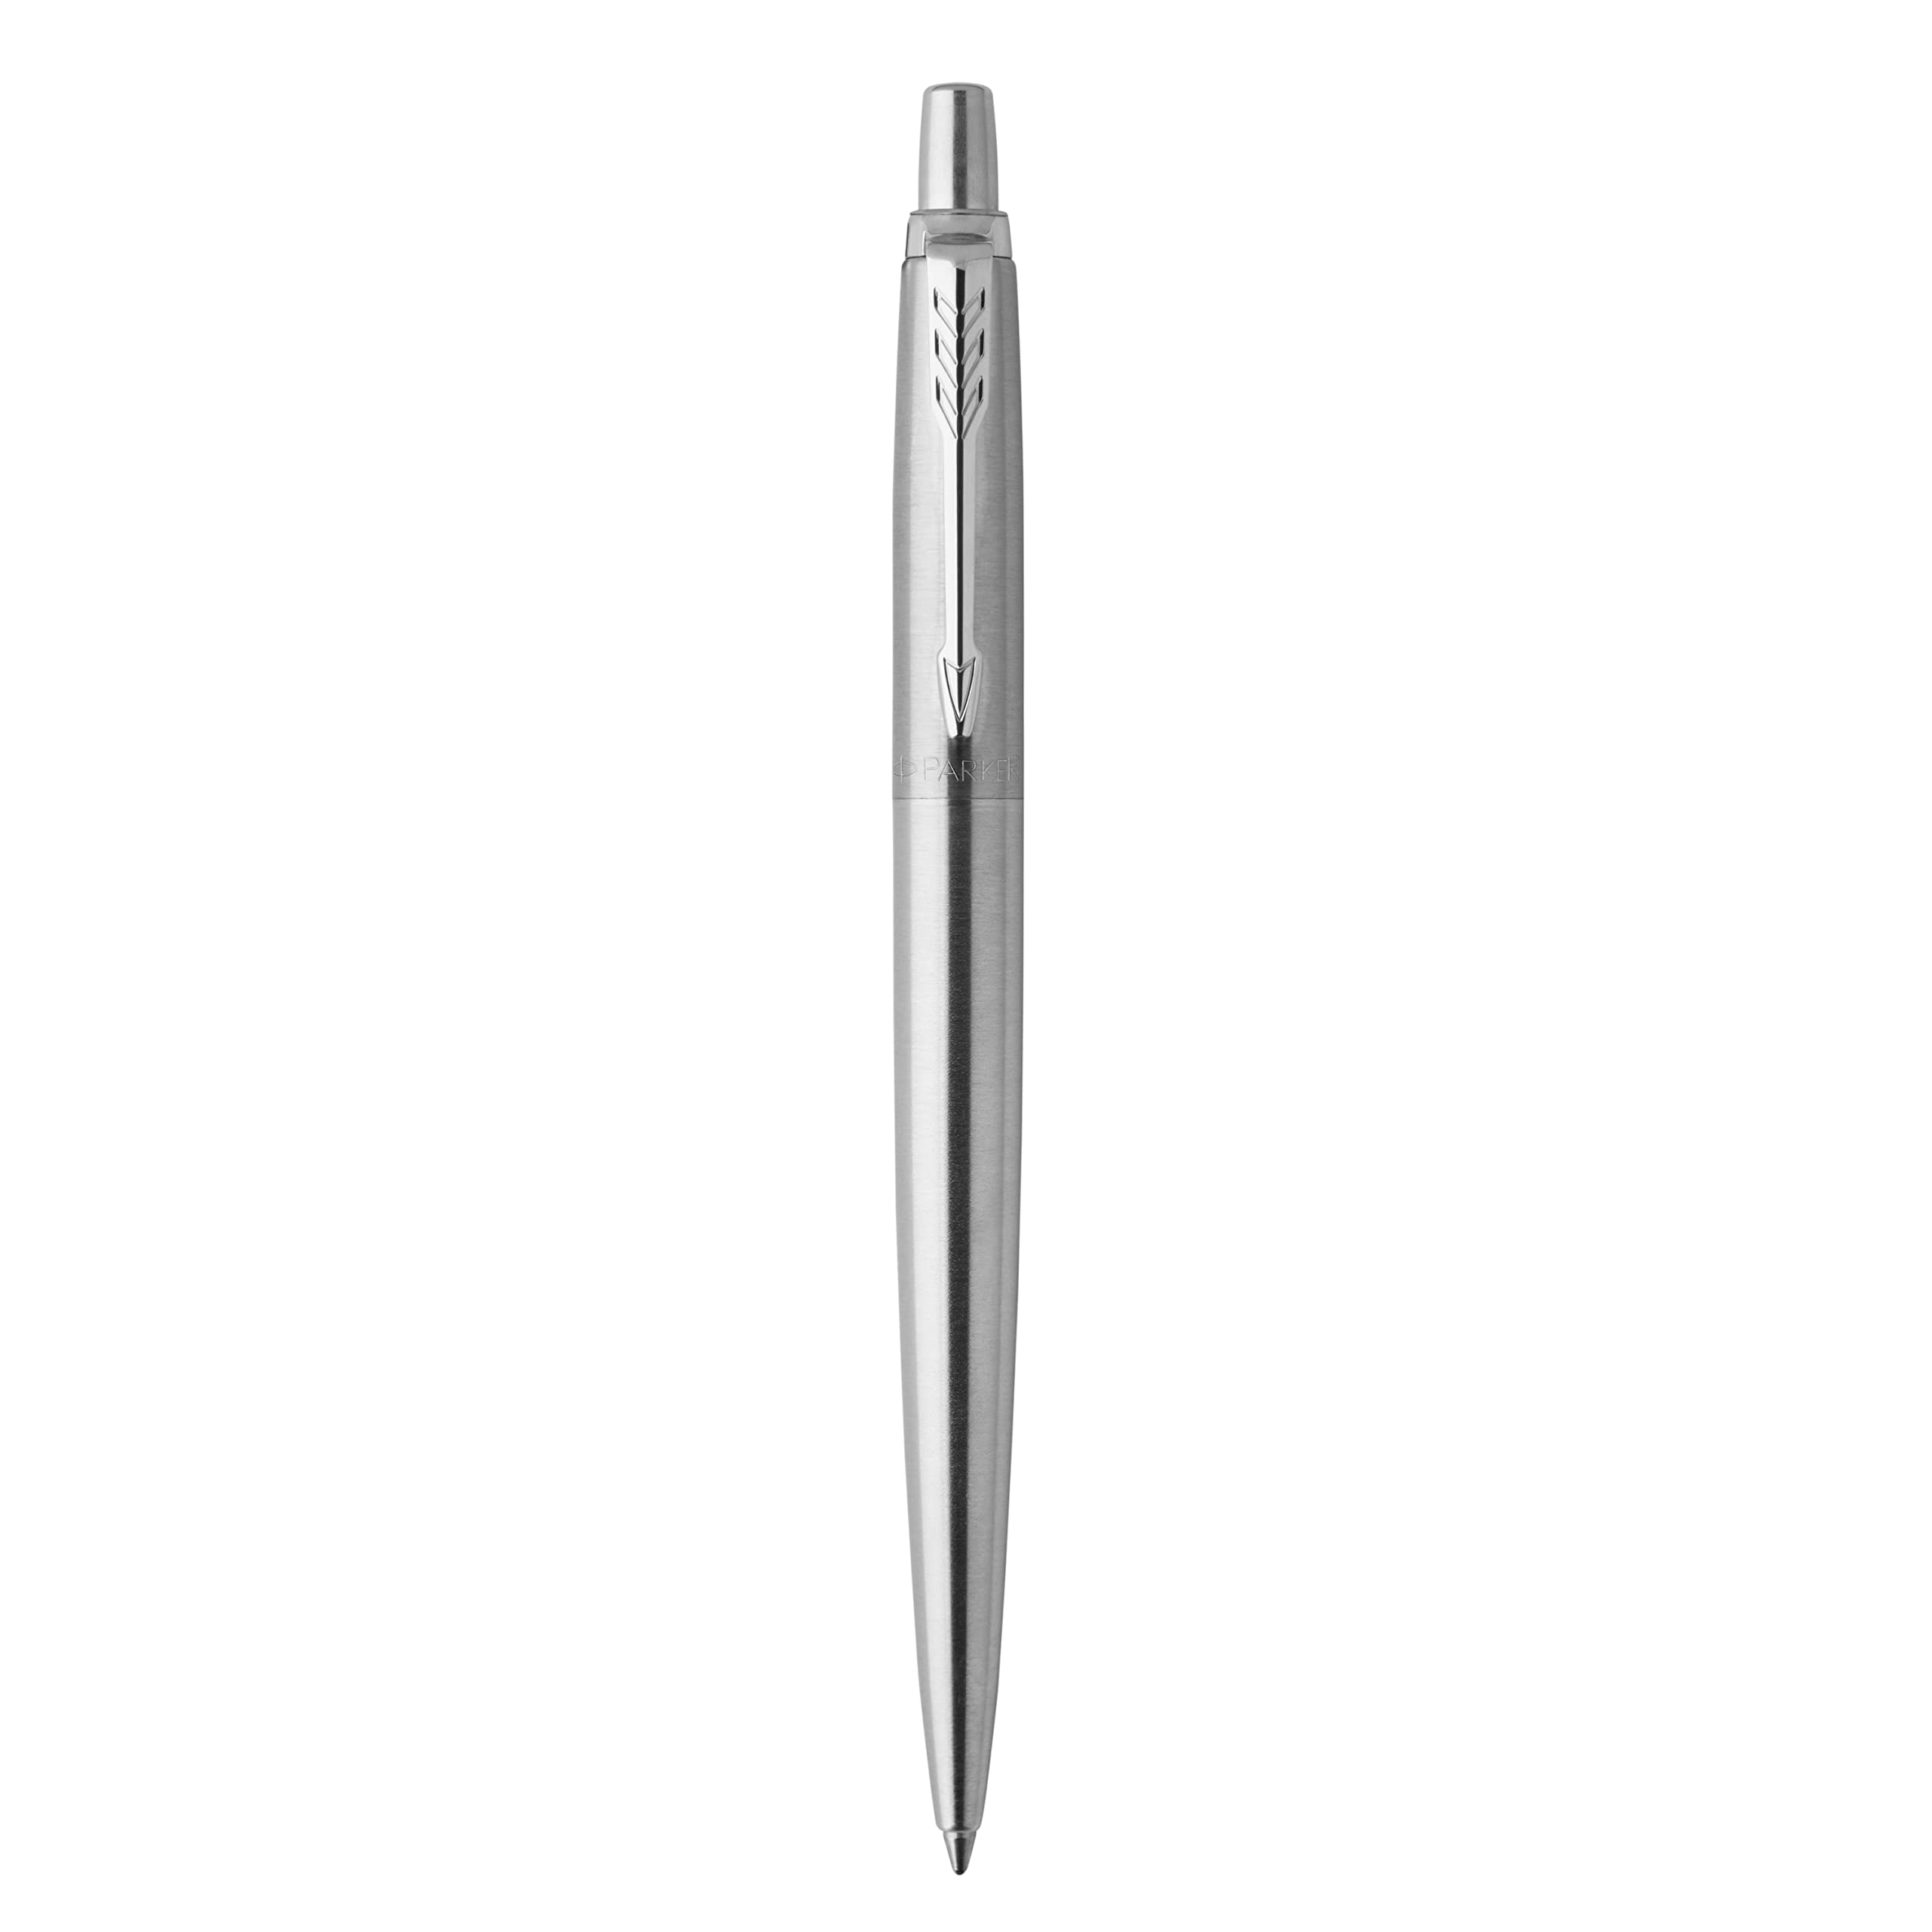 PARKER Jotter Ballpoint Pen, Stainless Steel with Chrome Trim, Medium Point Blue Ink, Gift Box